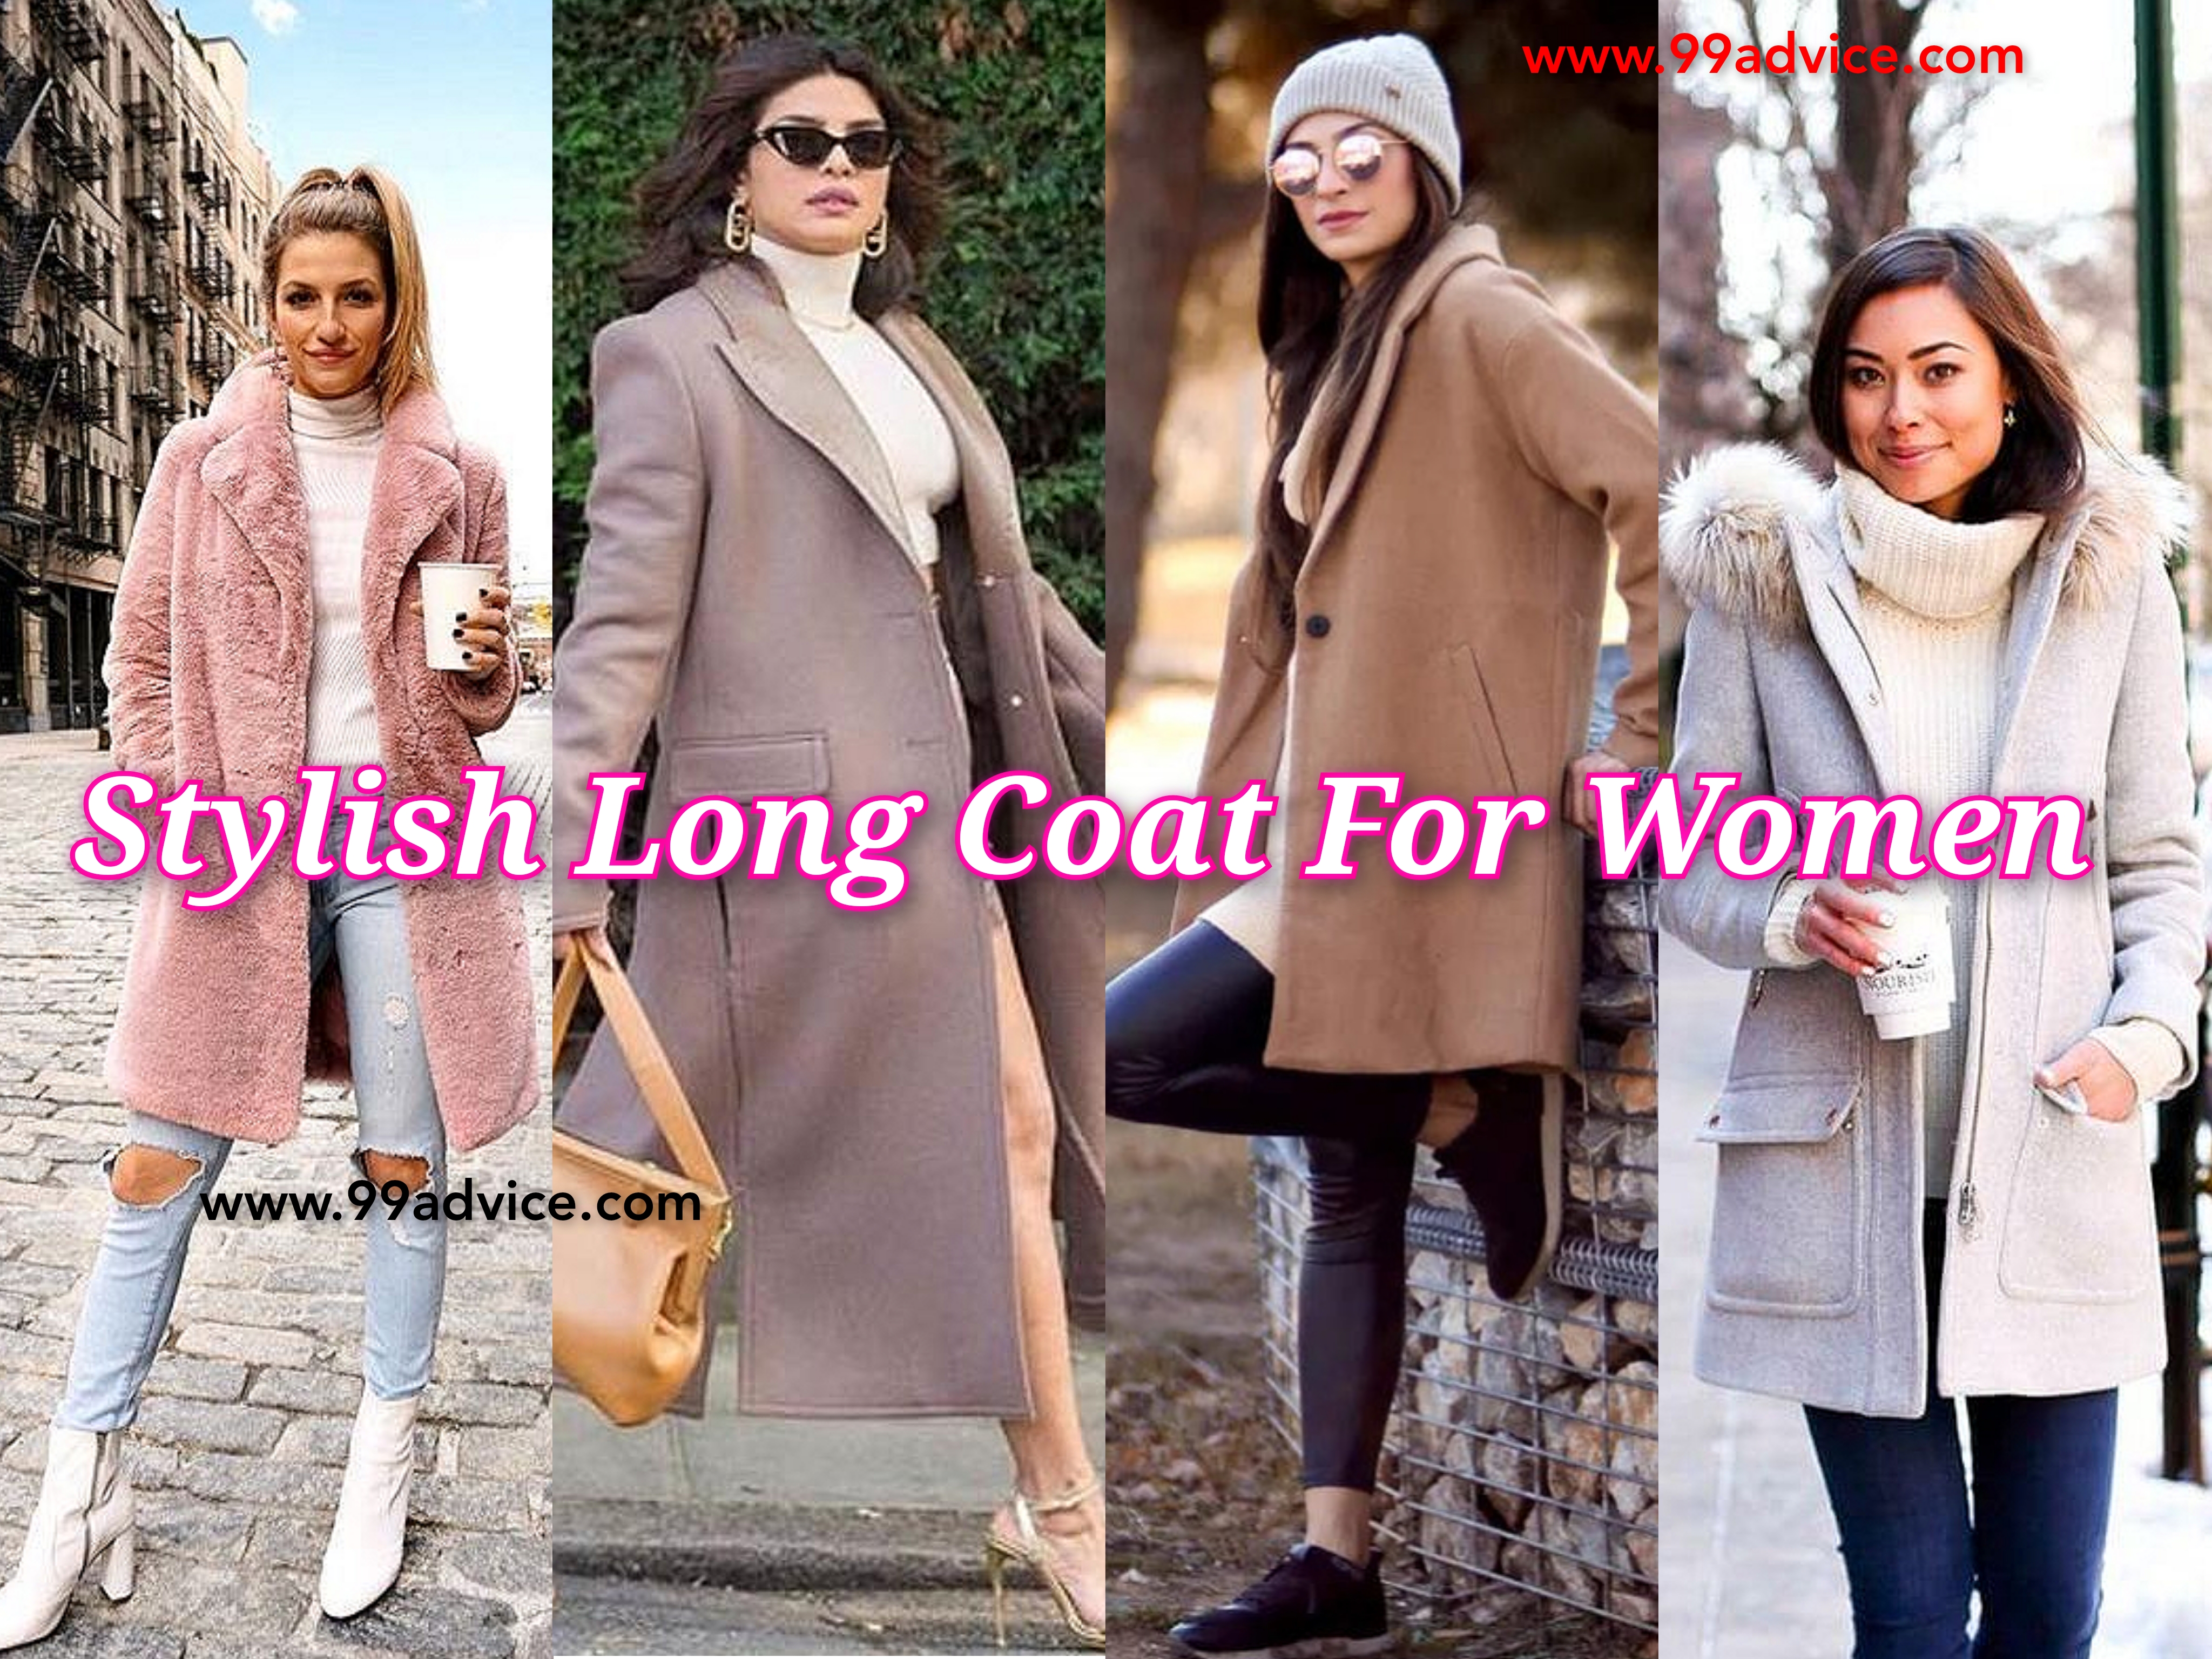 Best Winter Stylish Long Coat For Women On Amazon - गर्माहट के साथ साथ स्टाइल भी